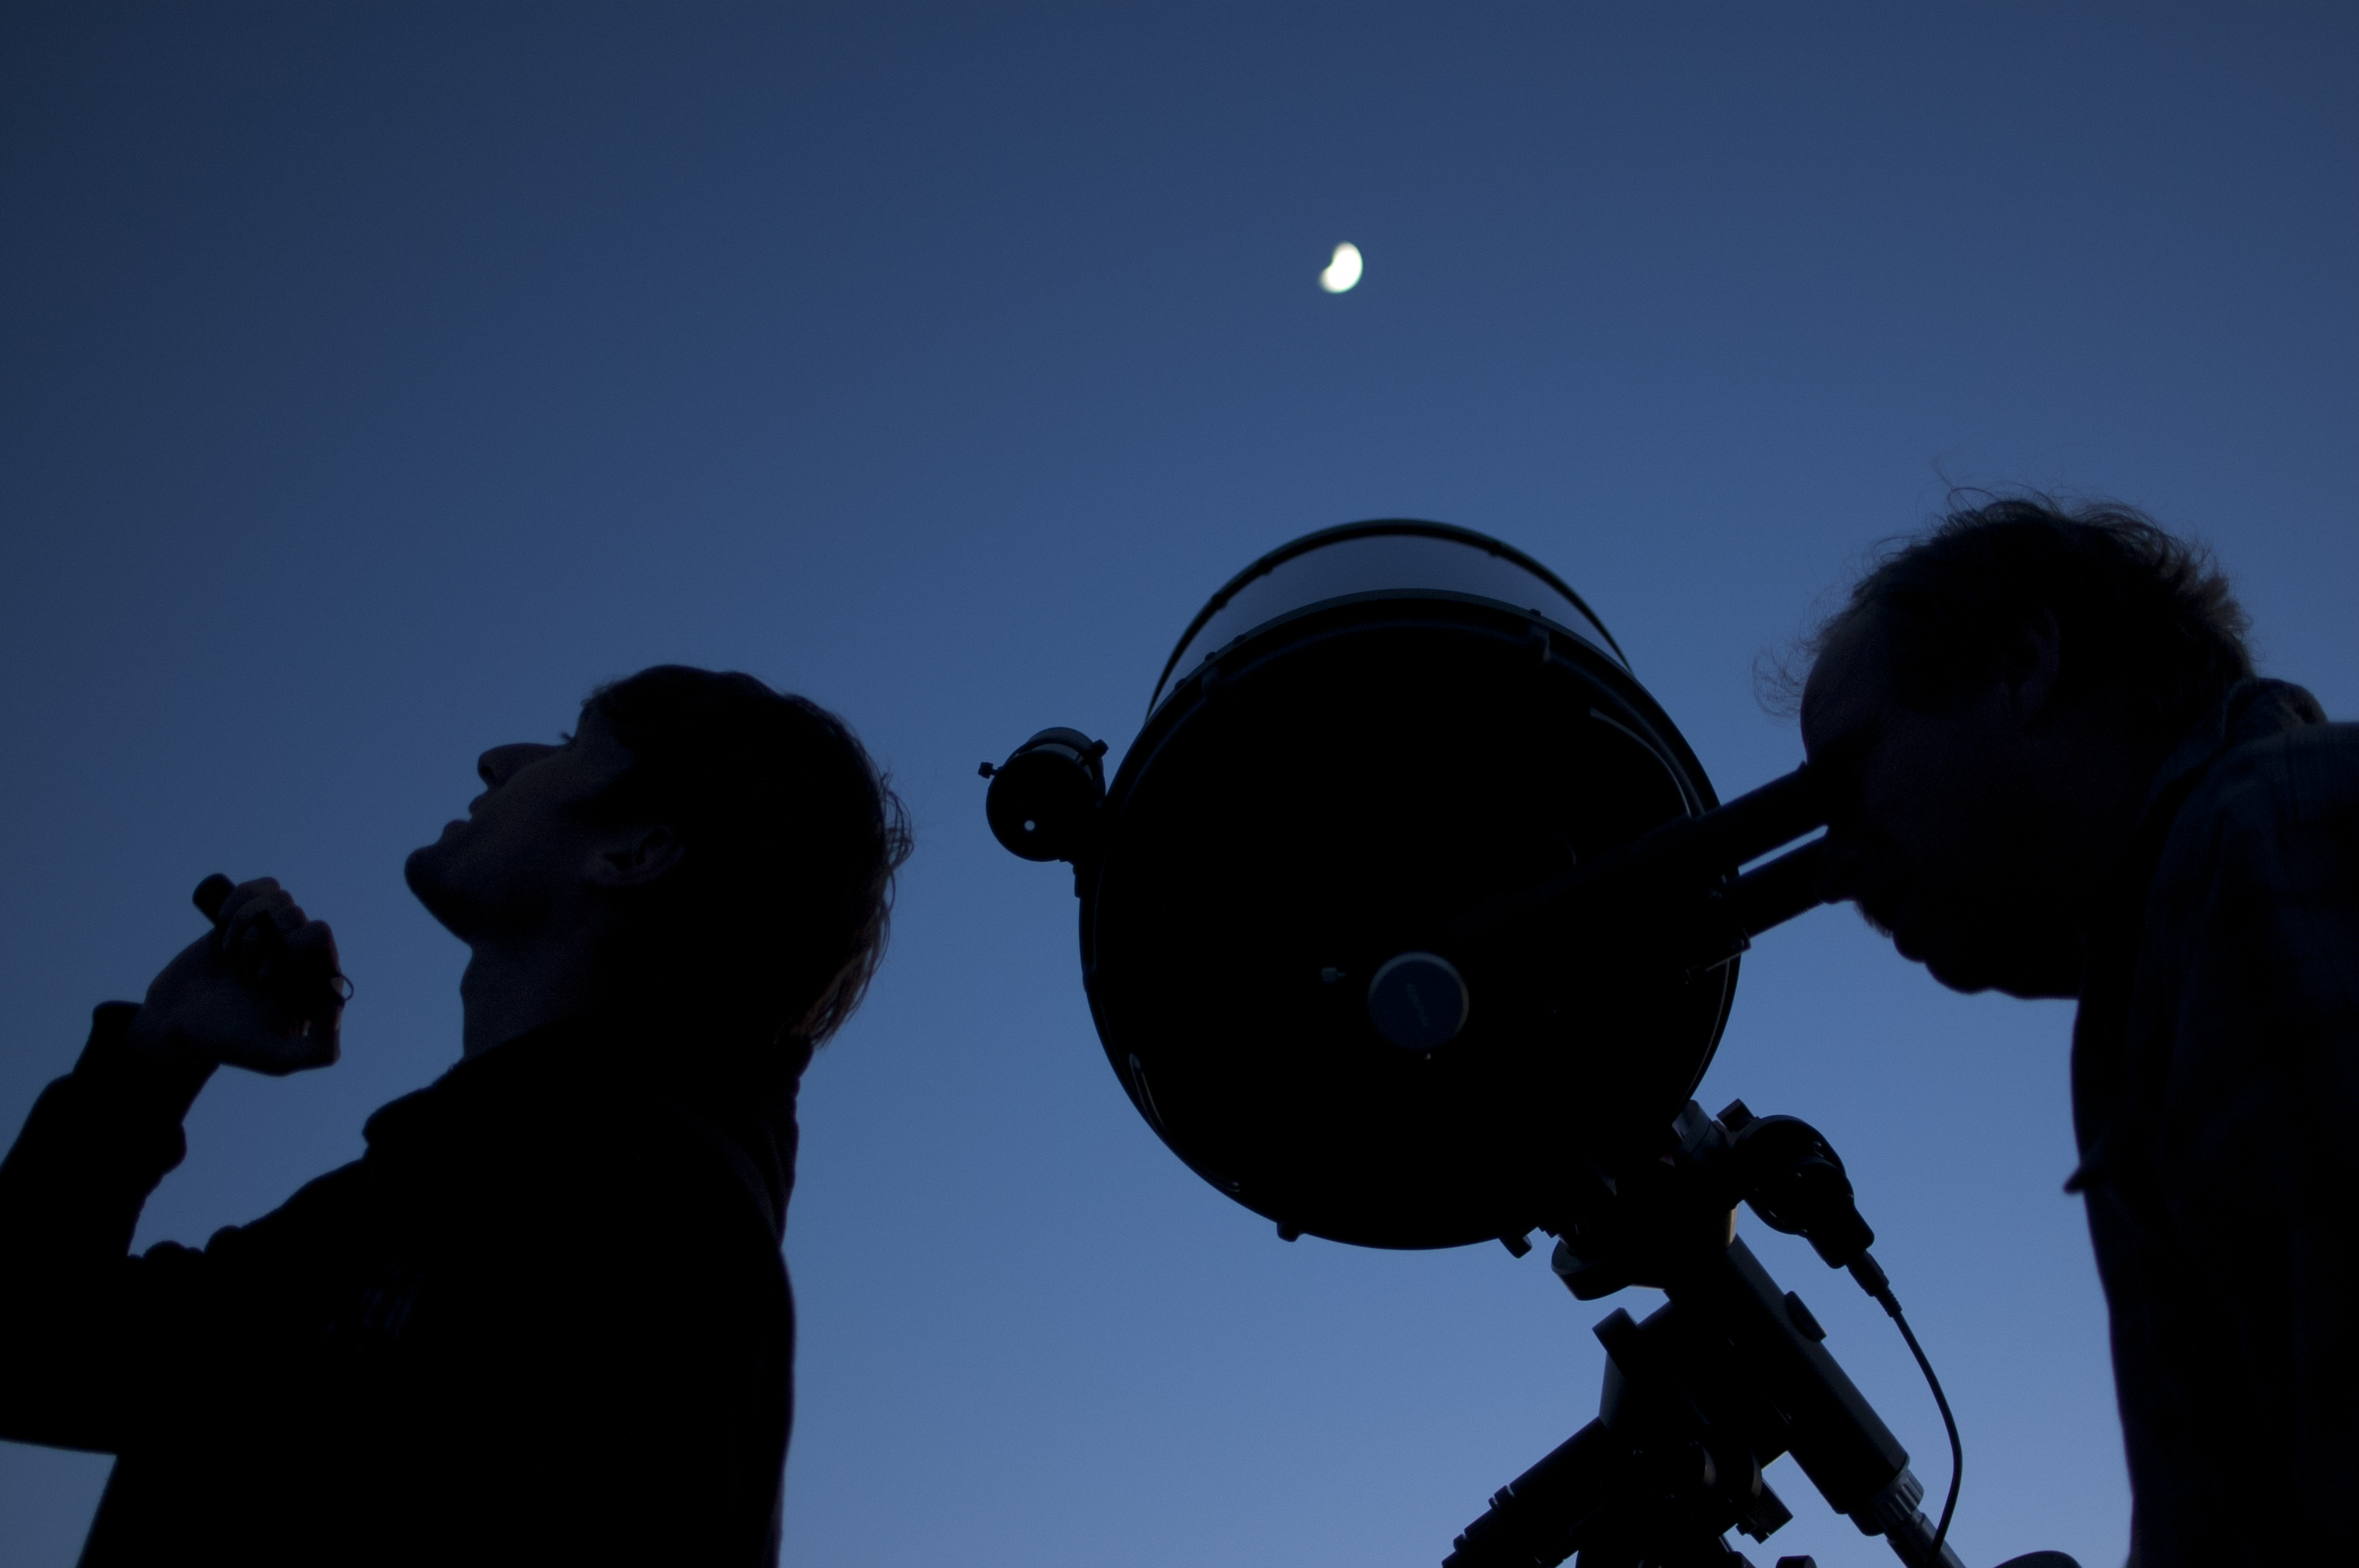 amateur astronomers in d c area